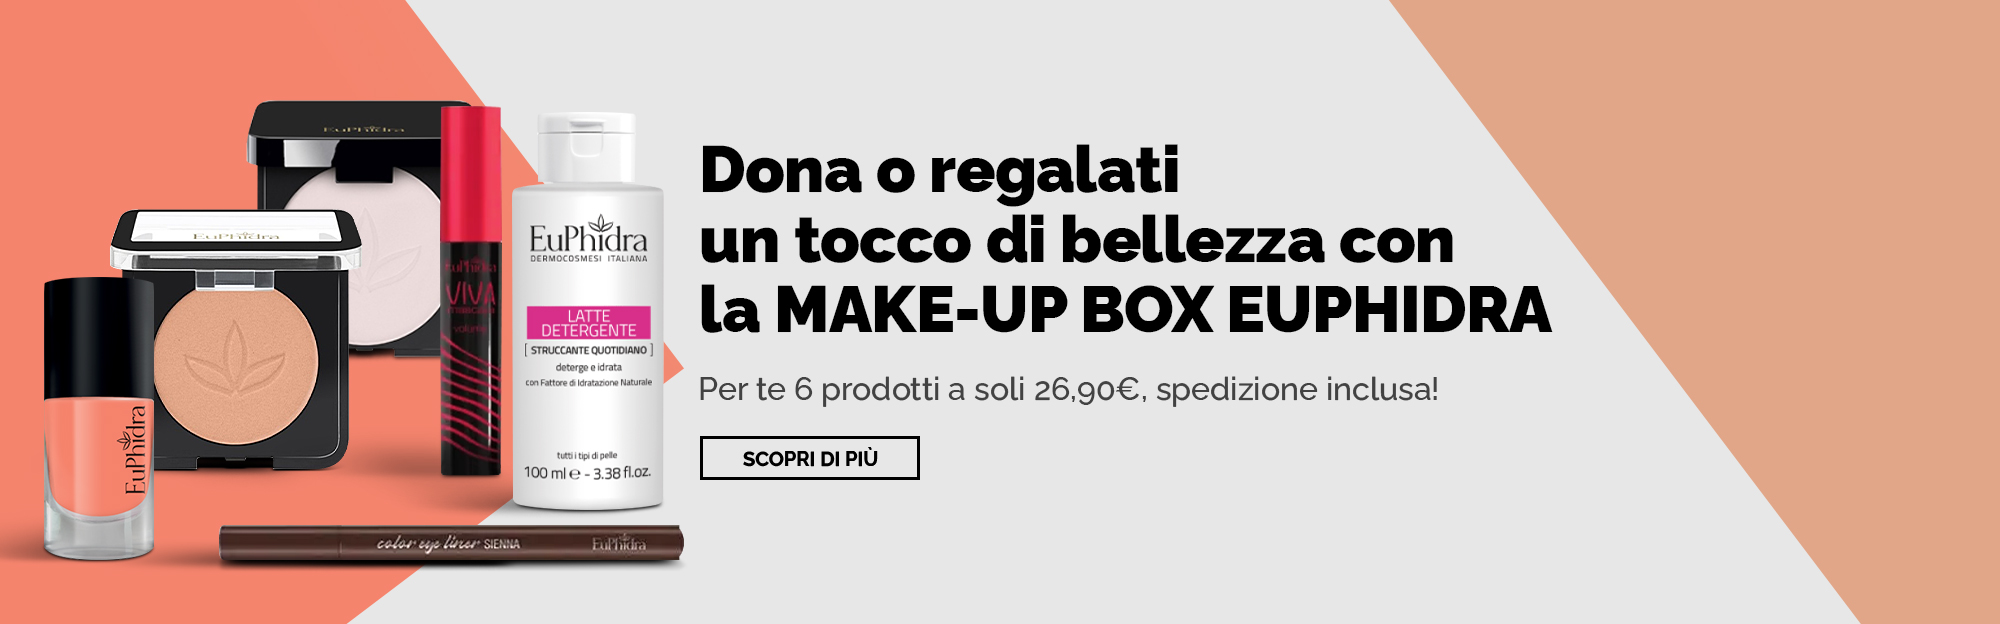 00000000000000FarmaciaProcaccini_slideD_make-up-box-euphidra